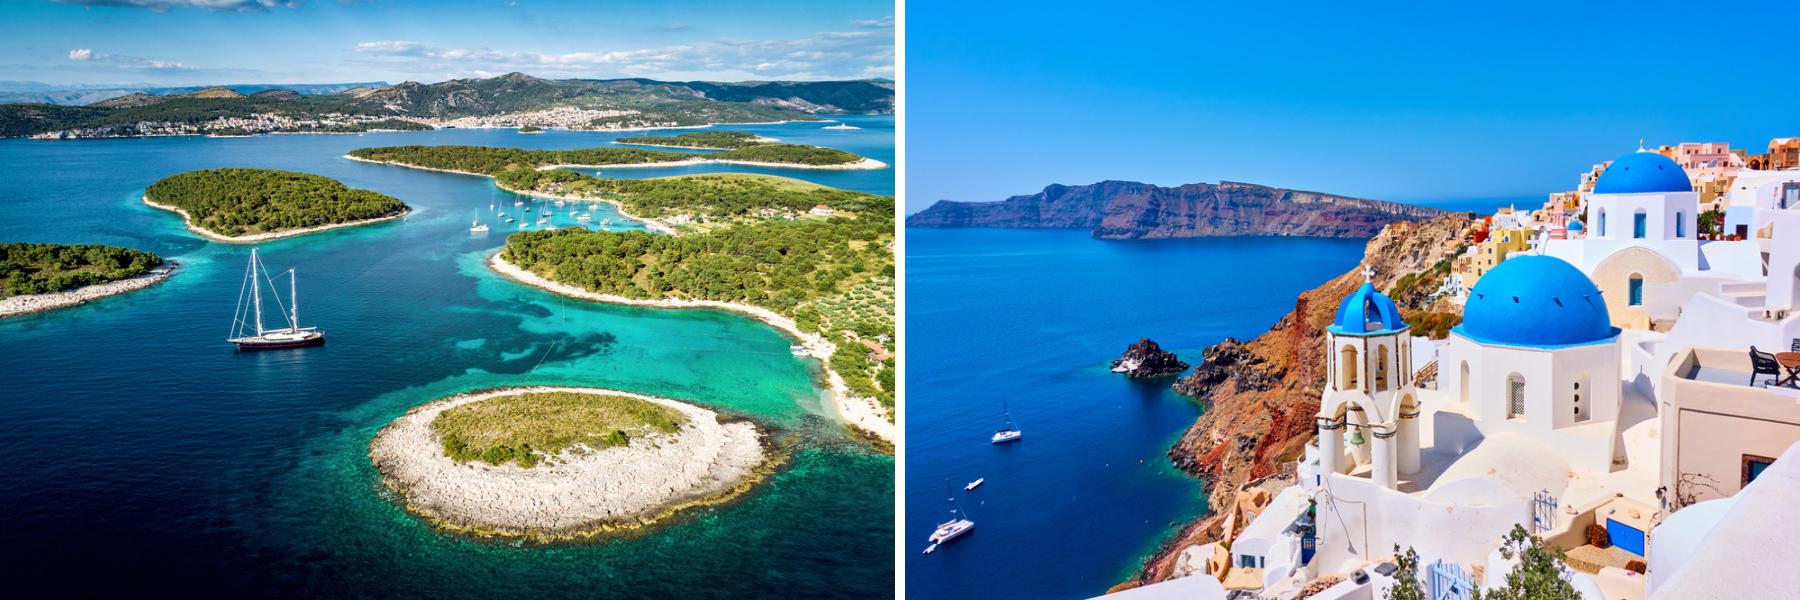 Kroatia og Hellas er øyland.